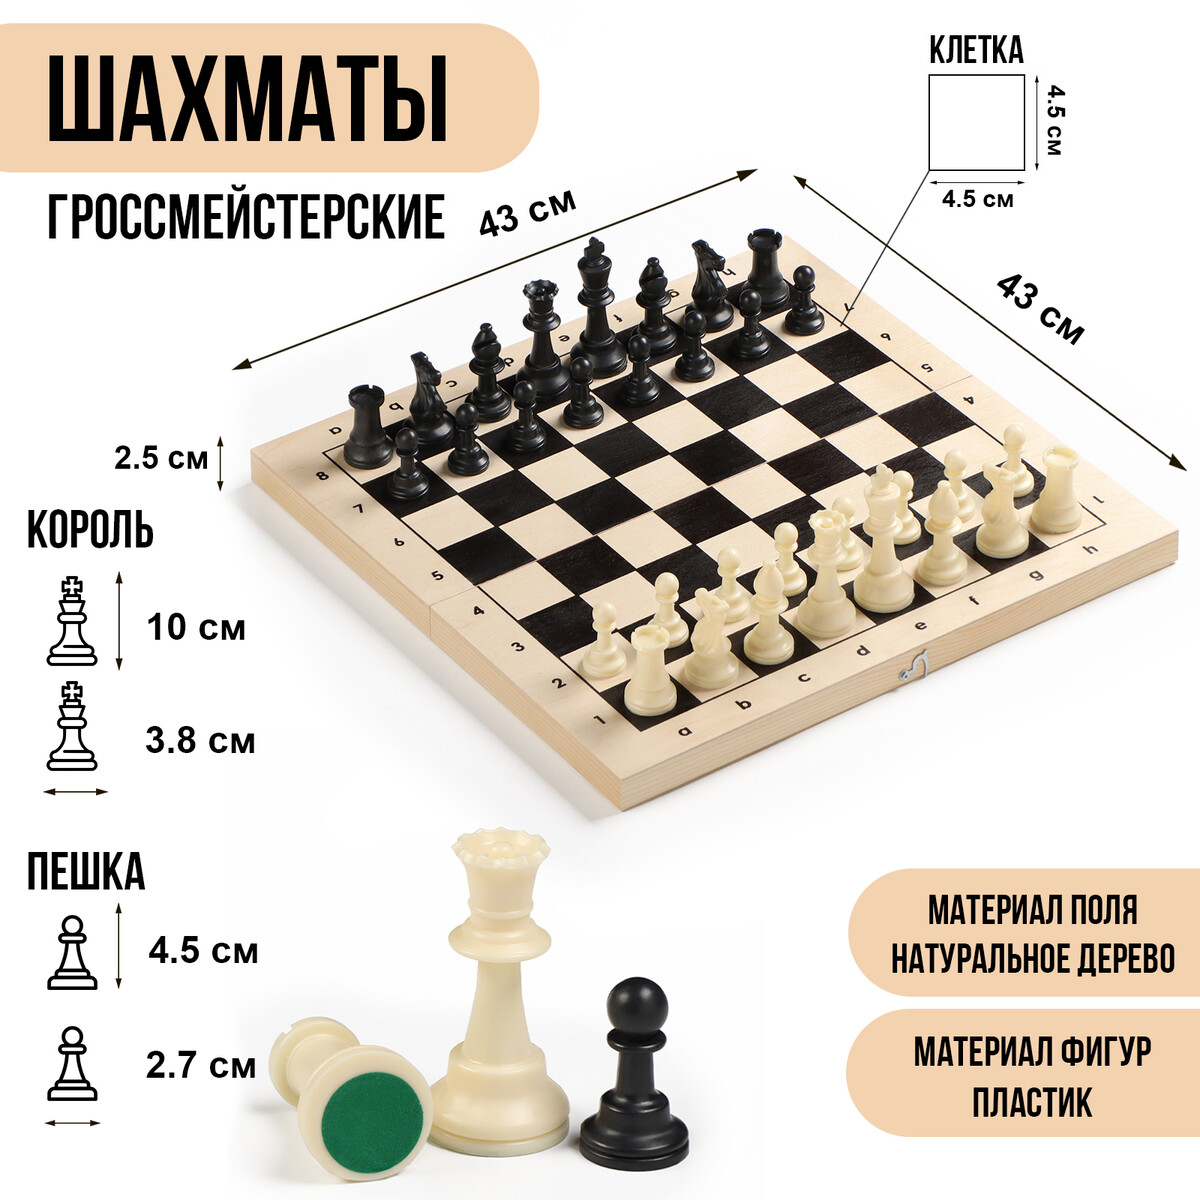 Шахматы гроссмейстерские, турнирные 43х43 см, фигуры пластик, король h-10 см, пешка h=4.5 см шахматы турнирные деревянные 40 х 40 см